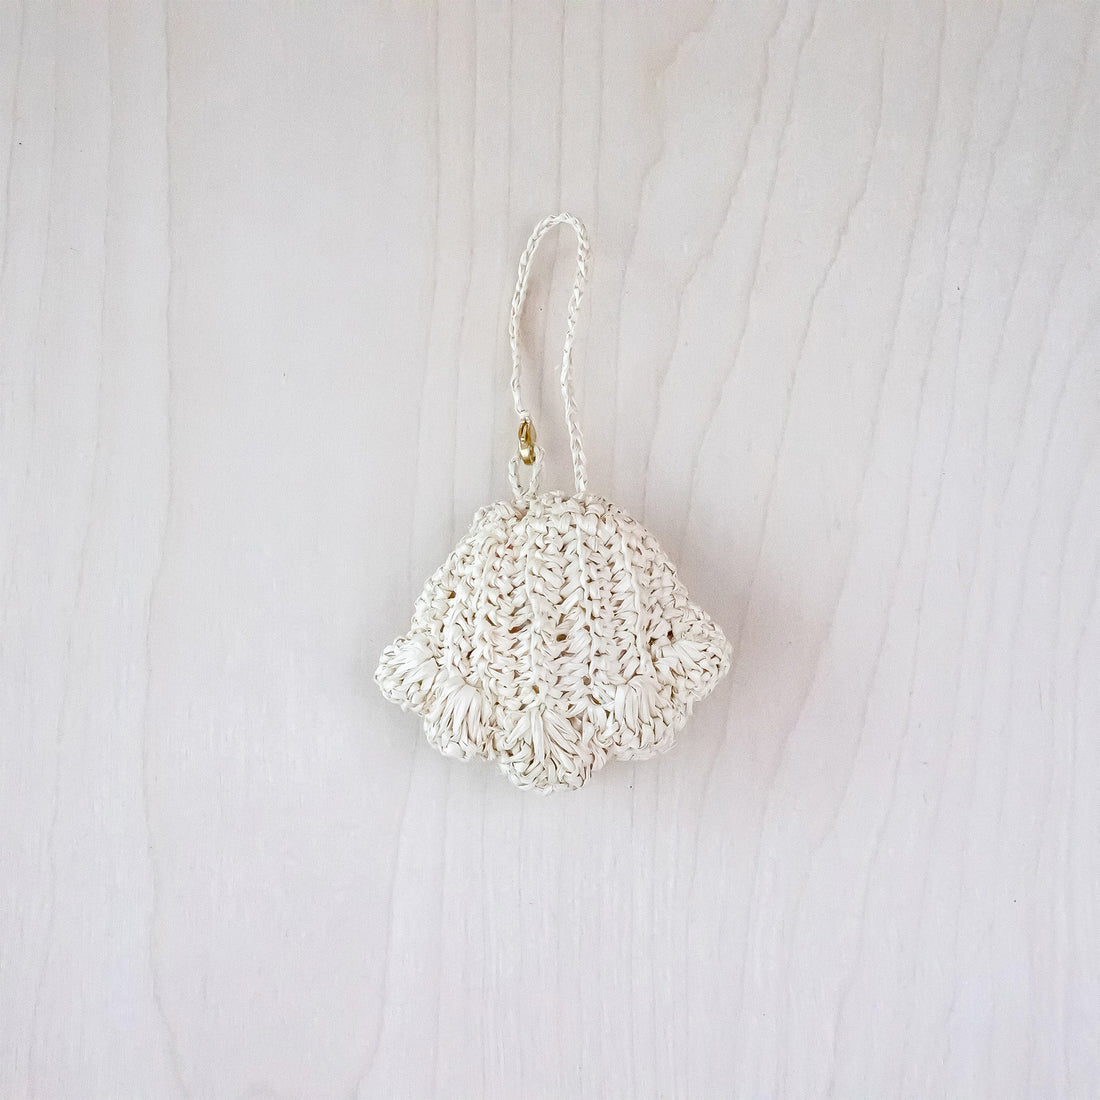 Bag charms - Shell Bag Accessory - Crochet Bag Charms | LIKHA - LIKHÂ